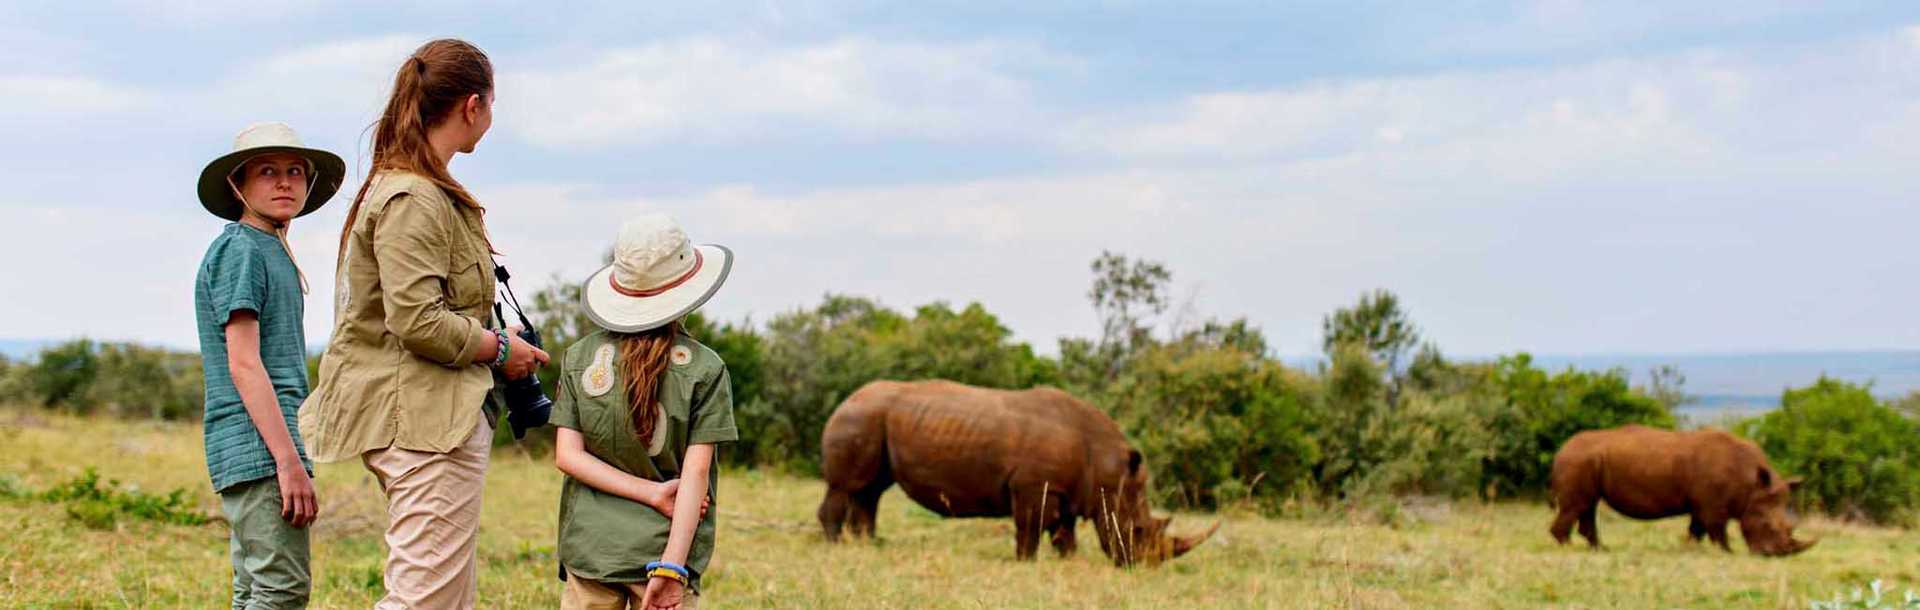 Family on African safari in Kenya